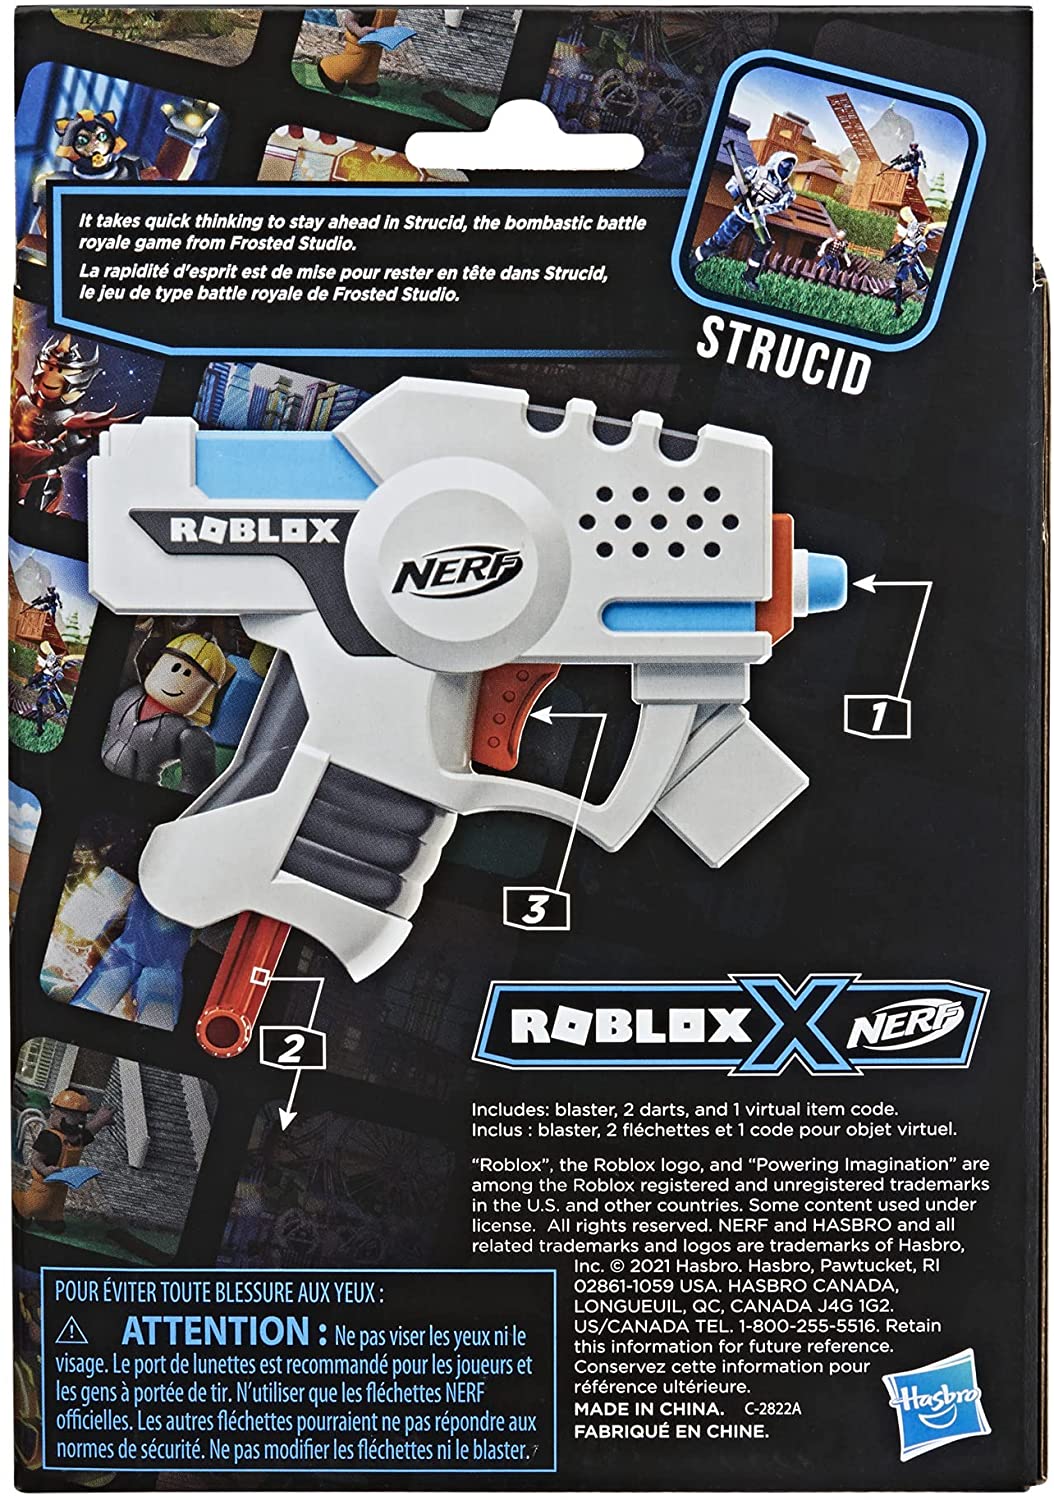  NERF Roblox Strucid: Boom Strike Dart Blaster, Pull-Down  Priming Handle, 2 Elite Darts, Code to Unlock in-Game Virtual Item, White :  Toys & Games